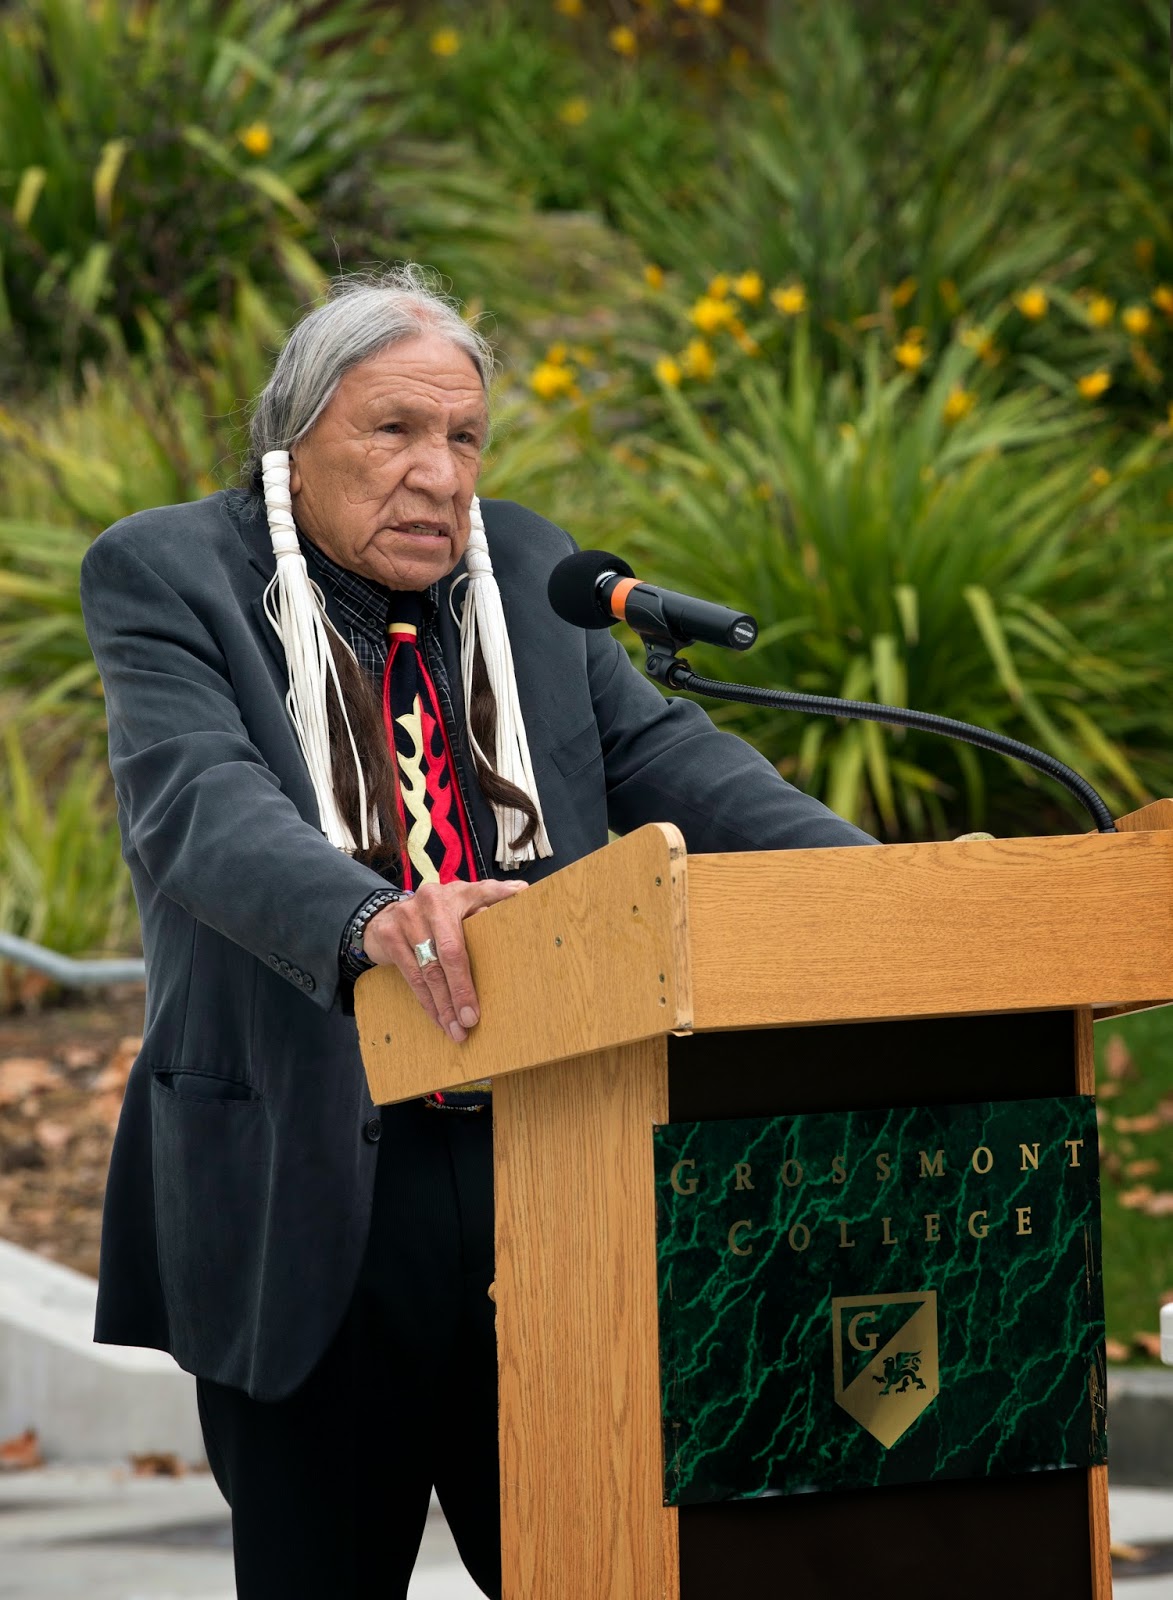 Grossmont College News Release: Native American actor urges retention